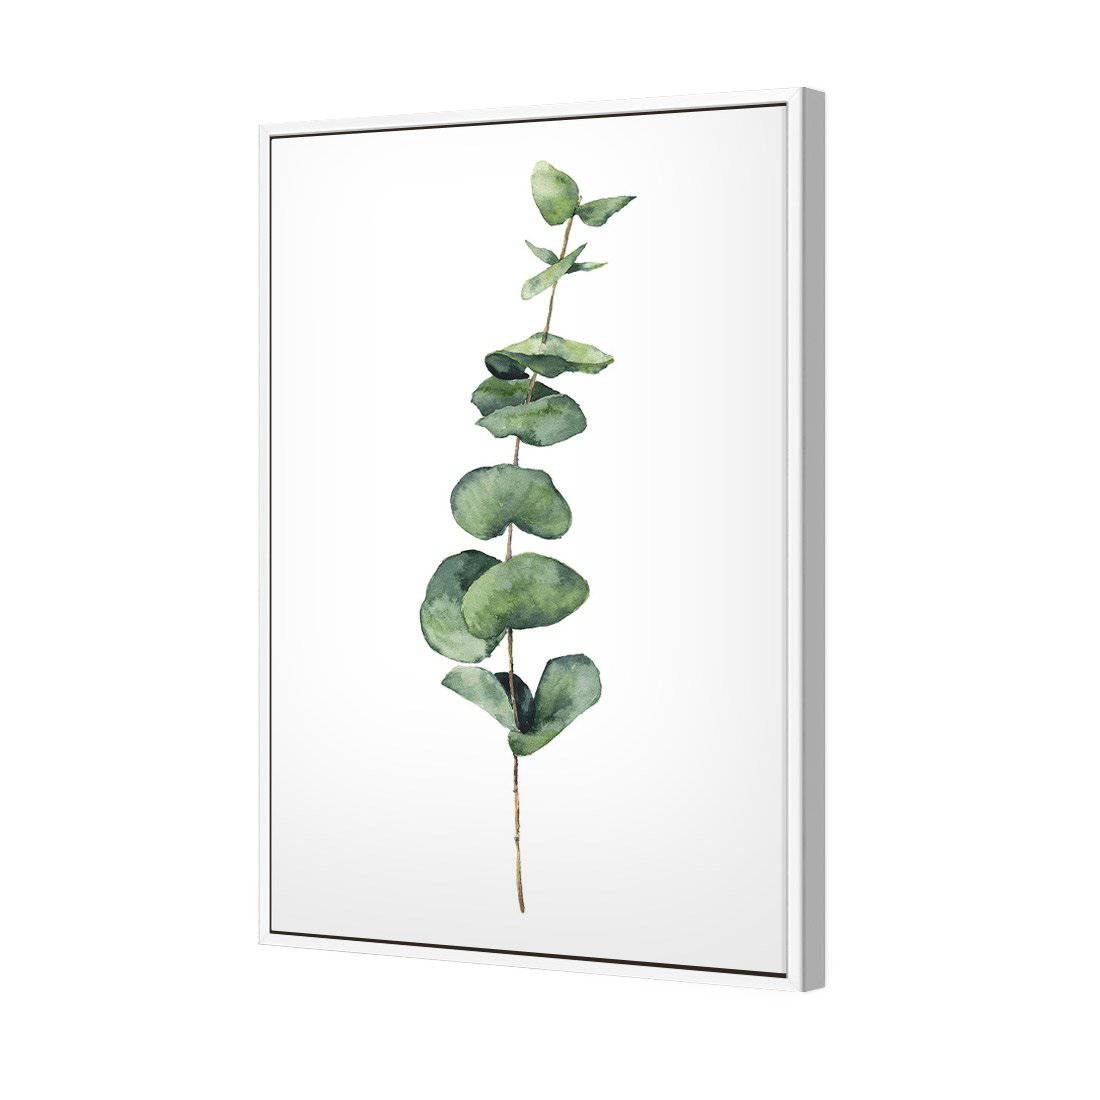 Fragrant Herb 2 Canvas Art-Canvas-Wall Art Designs-45x30cm-Canvas - White Frame-Wall Art Designs